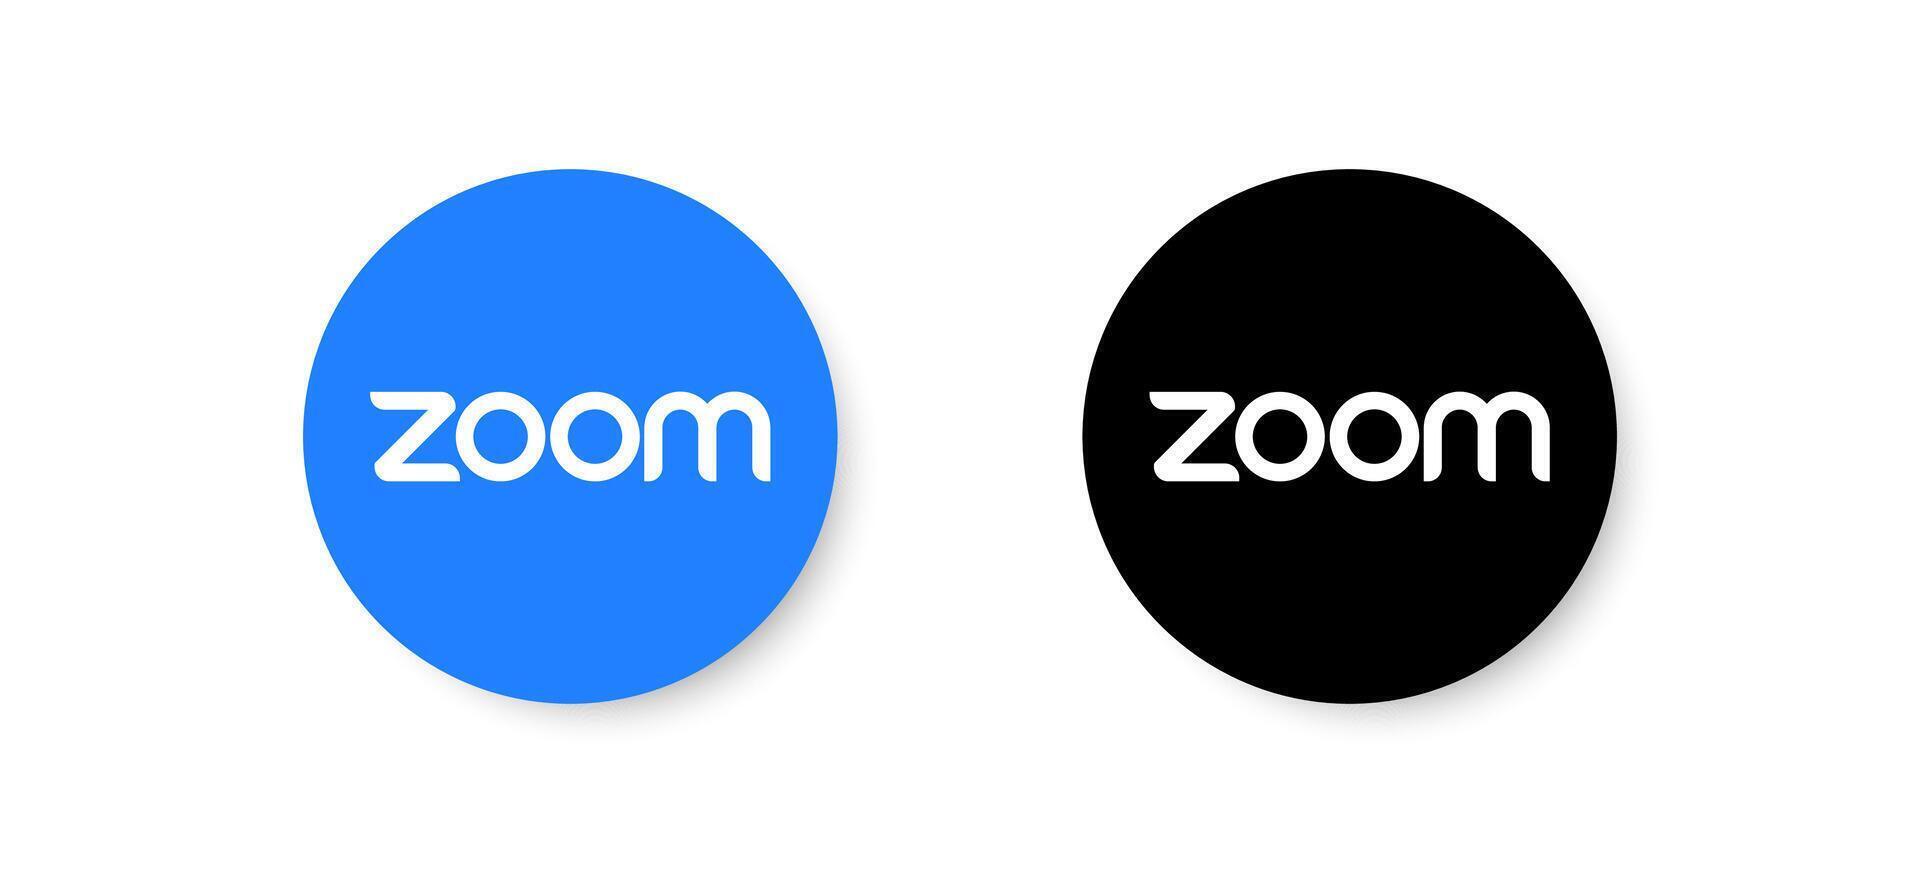 Circle Zoom logotype icon. Social media app. Network application. Popular editorial brand. Vector illustration.